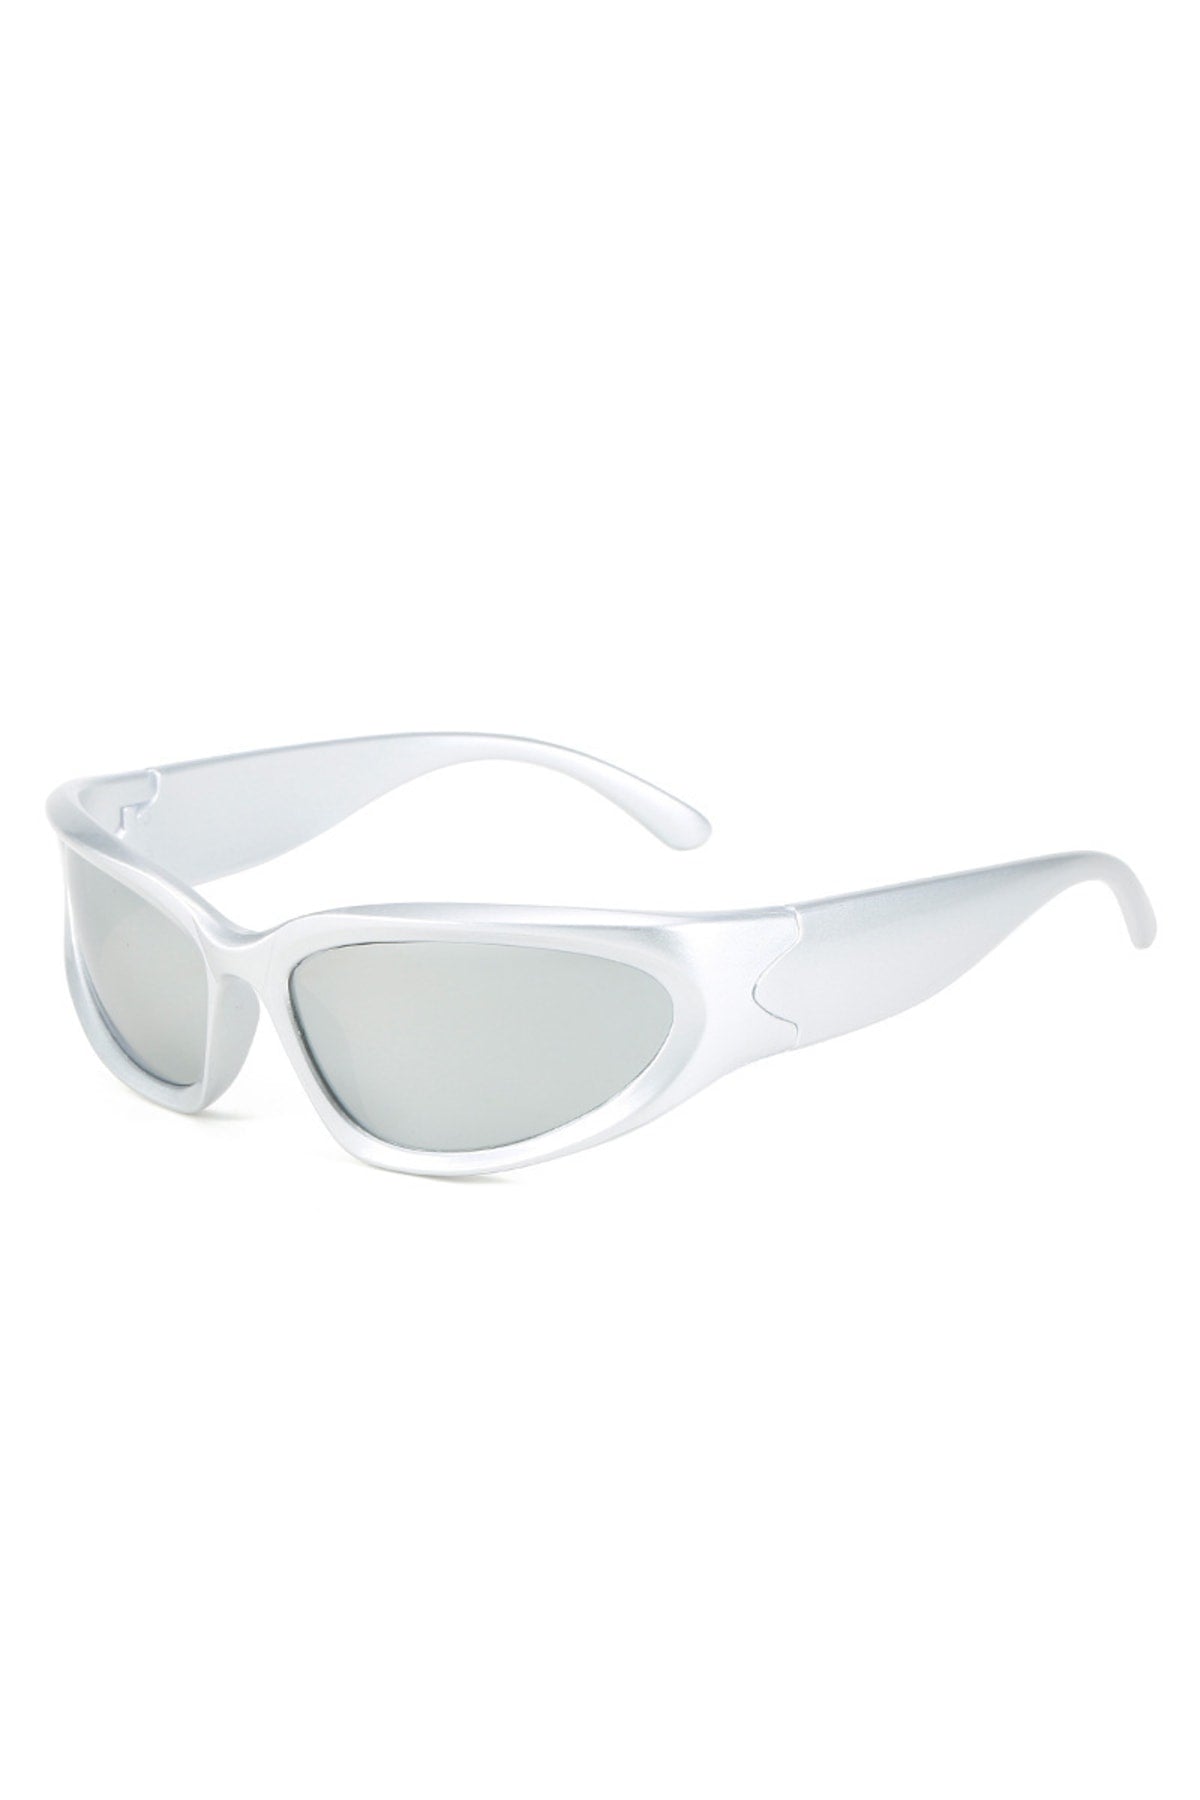 Elon Silver Mirror Y2k Vintage Fashion Lightweight Unisex Sunglasses